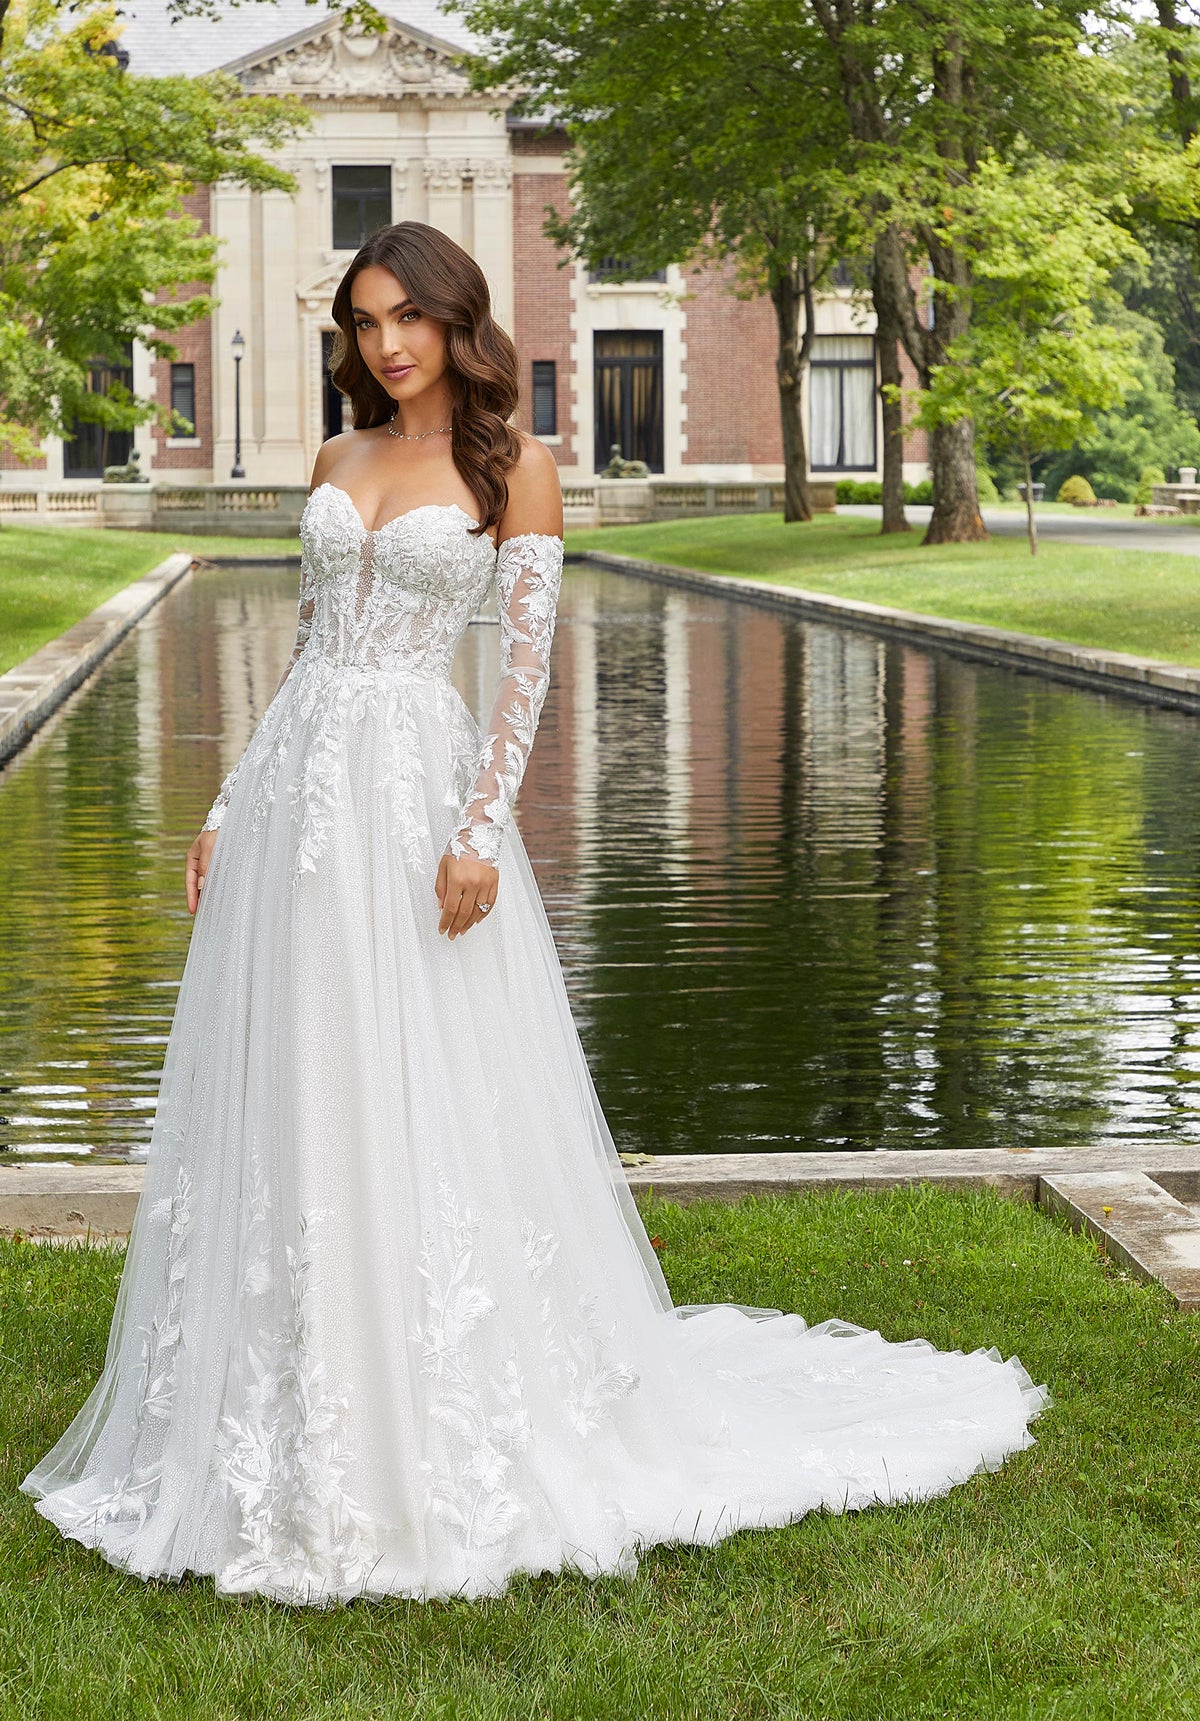 Drucilla Wedding Dress 2420  Lace & Tulle princess wedding gown